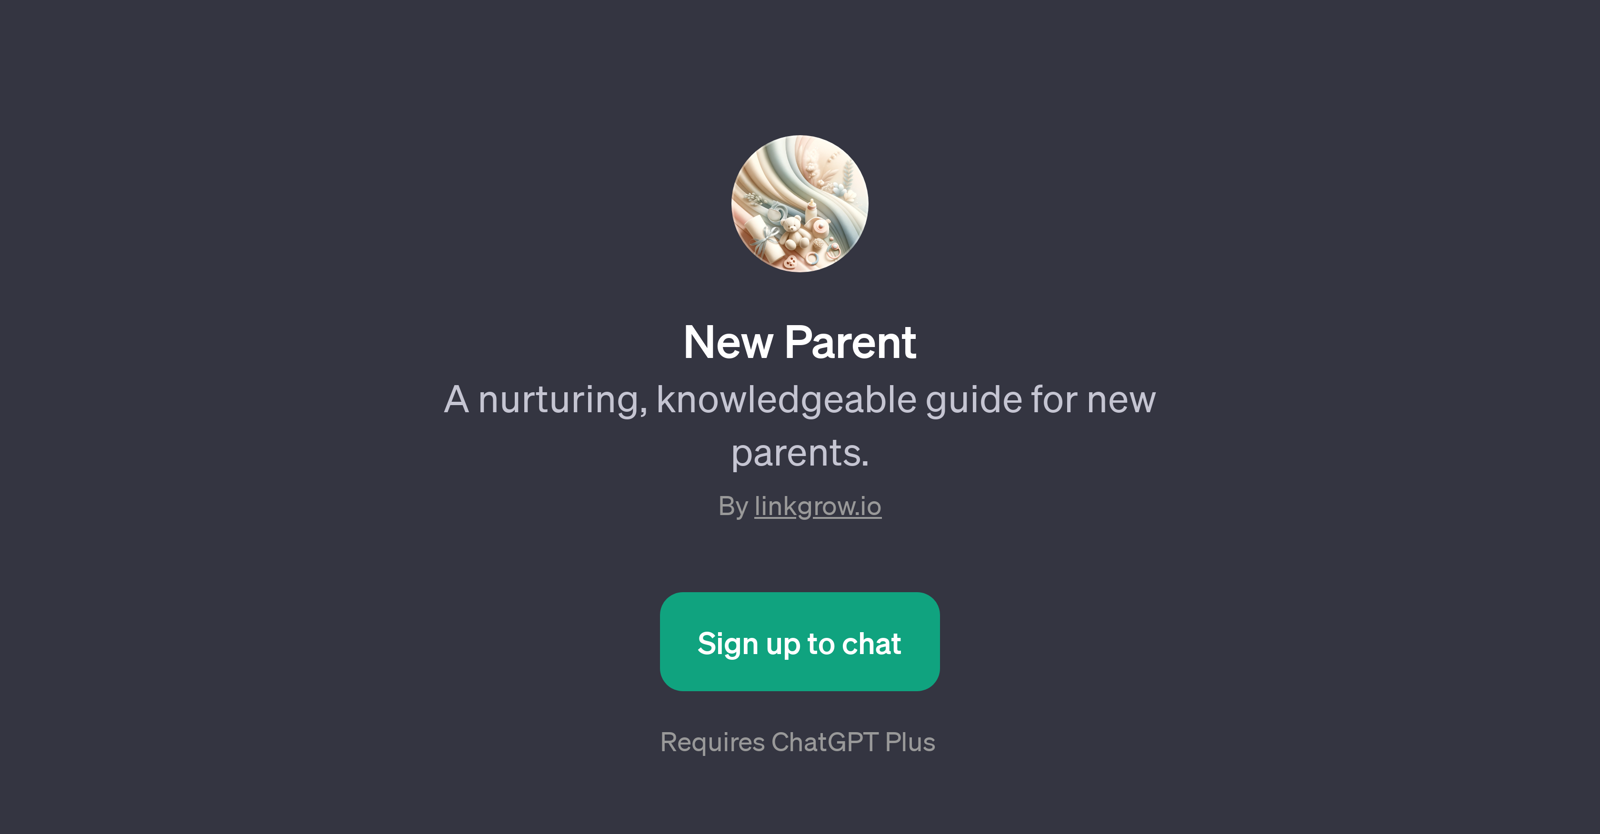 New Parent website